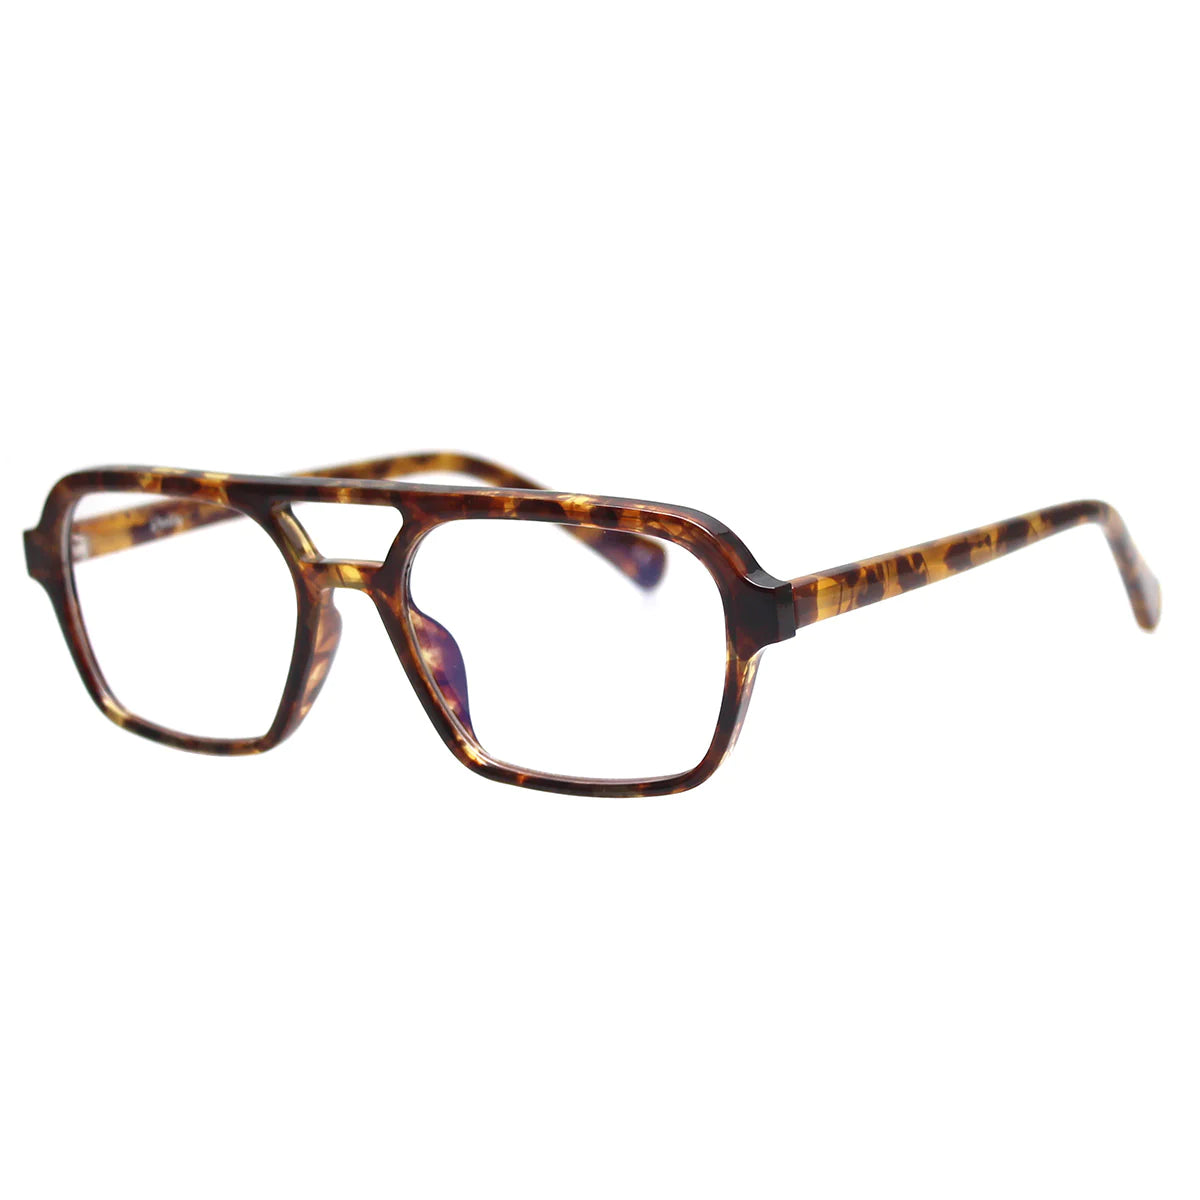 Tomorrowland Sunglasses - Reality Eyewear - Beechworth Emporium